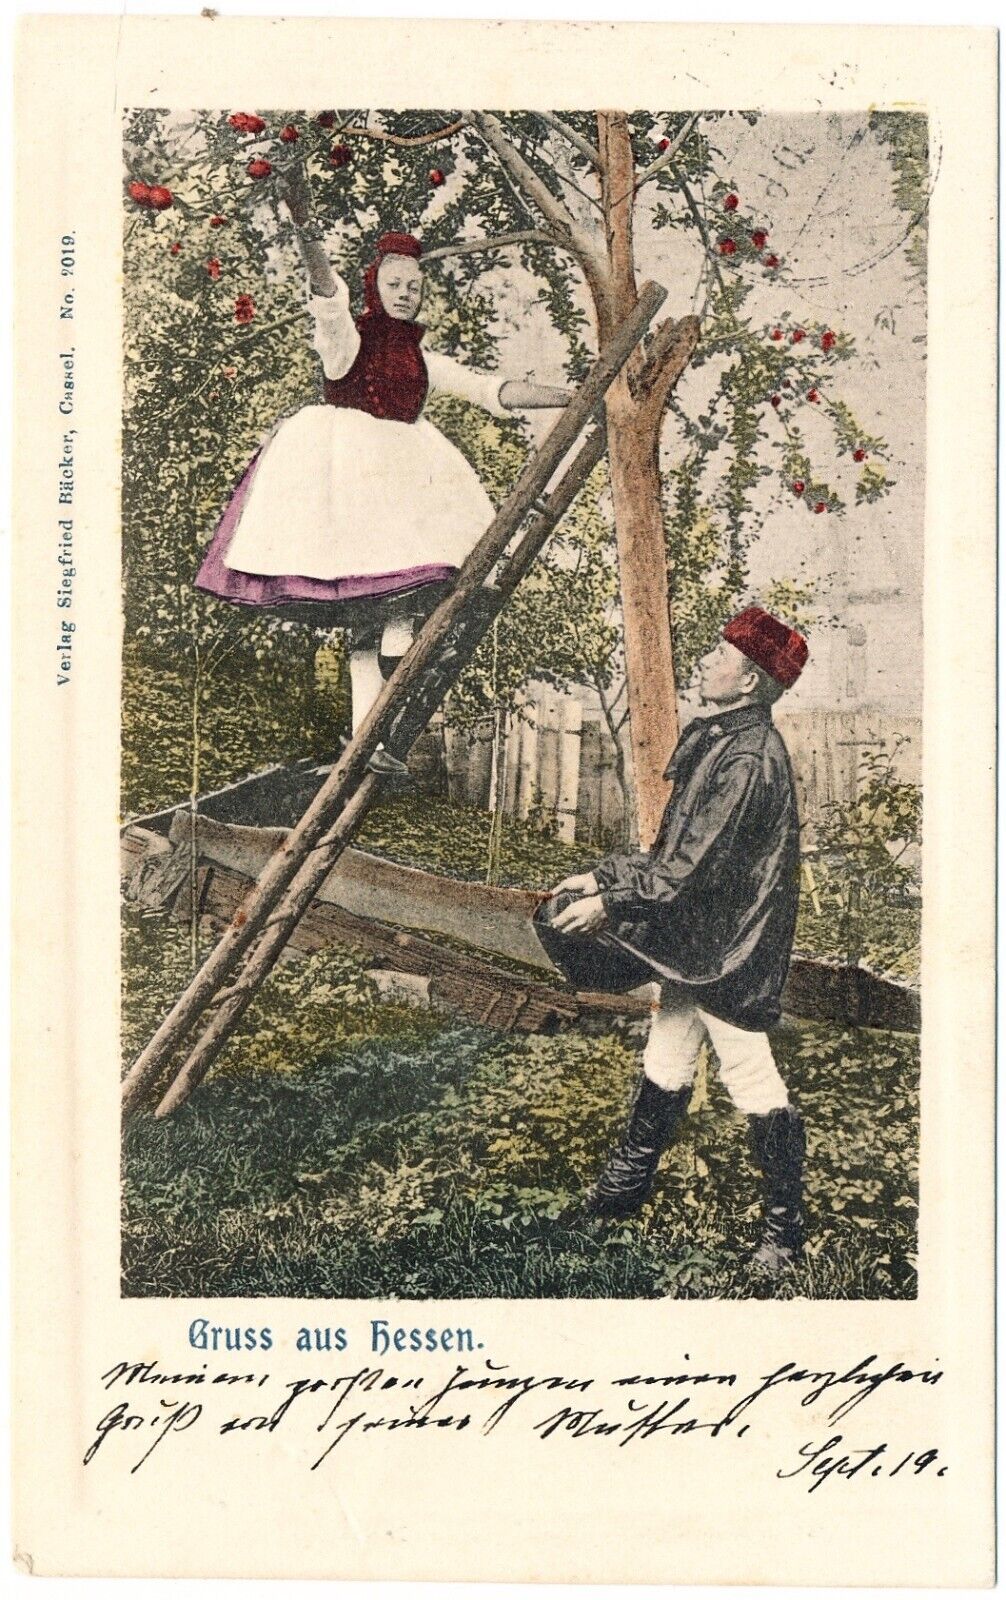 Gruss Aus Hessen-Couple Picking Apples-Verlag Siegfried Backer,Cassel-1903